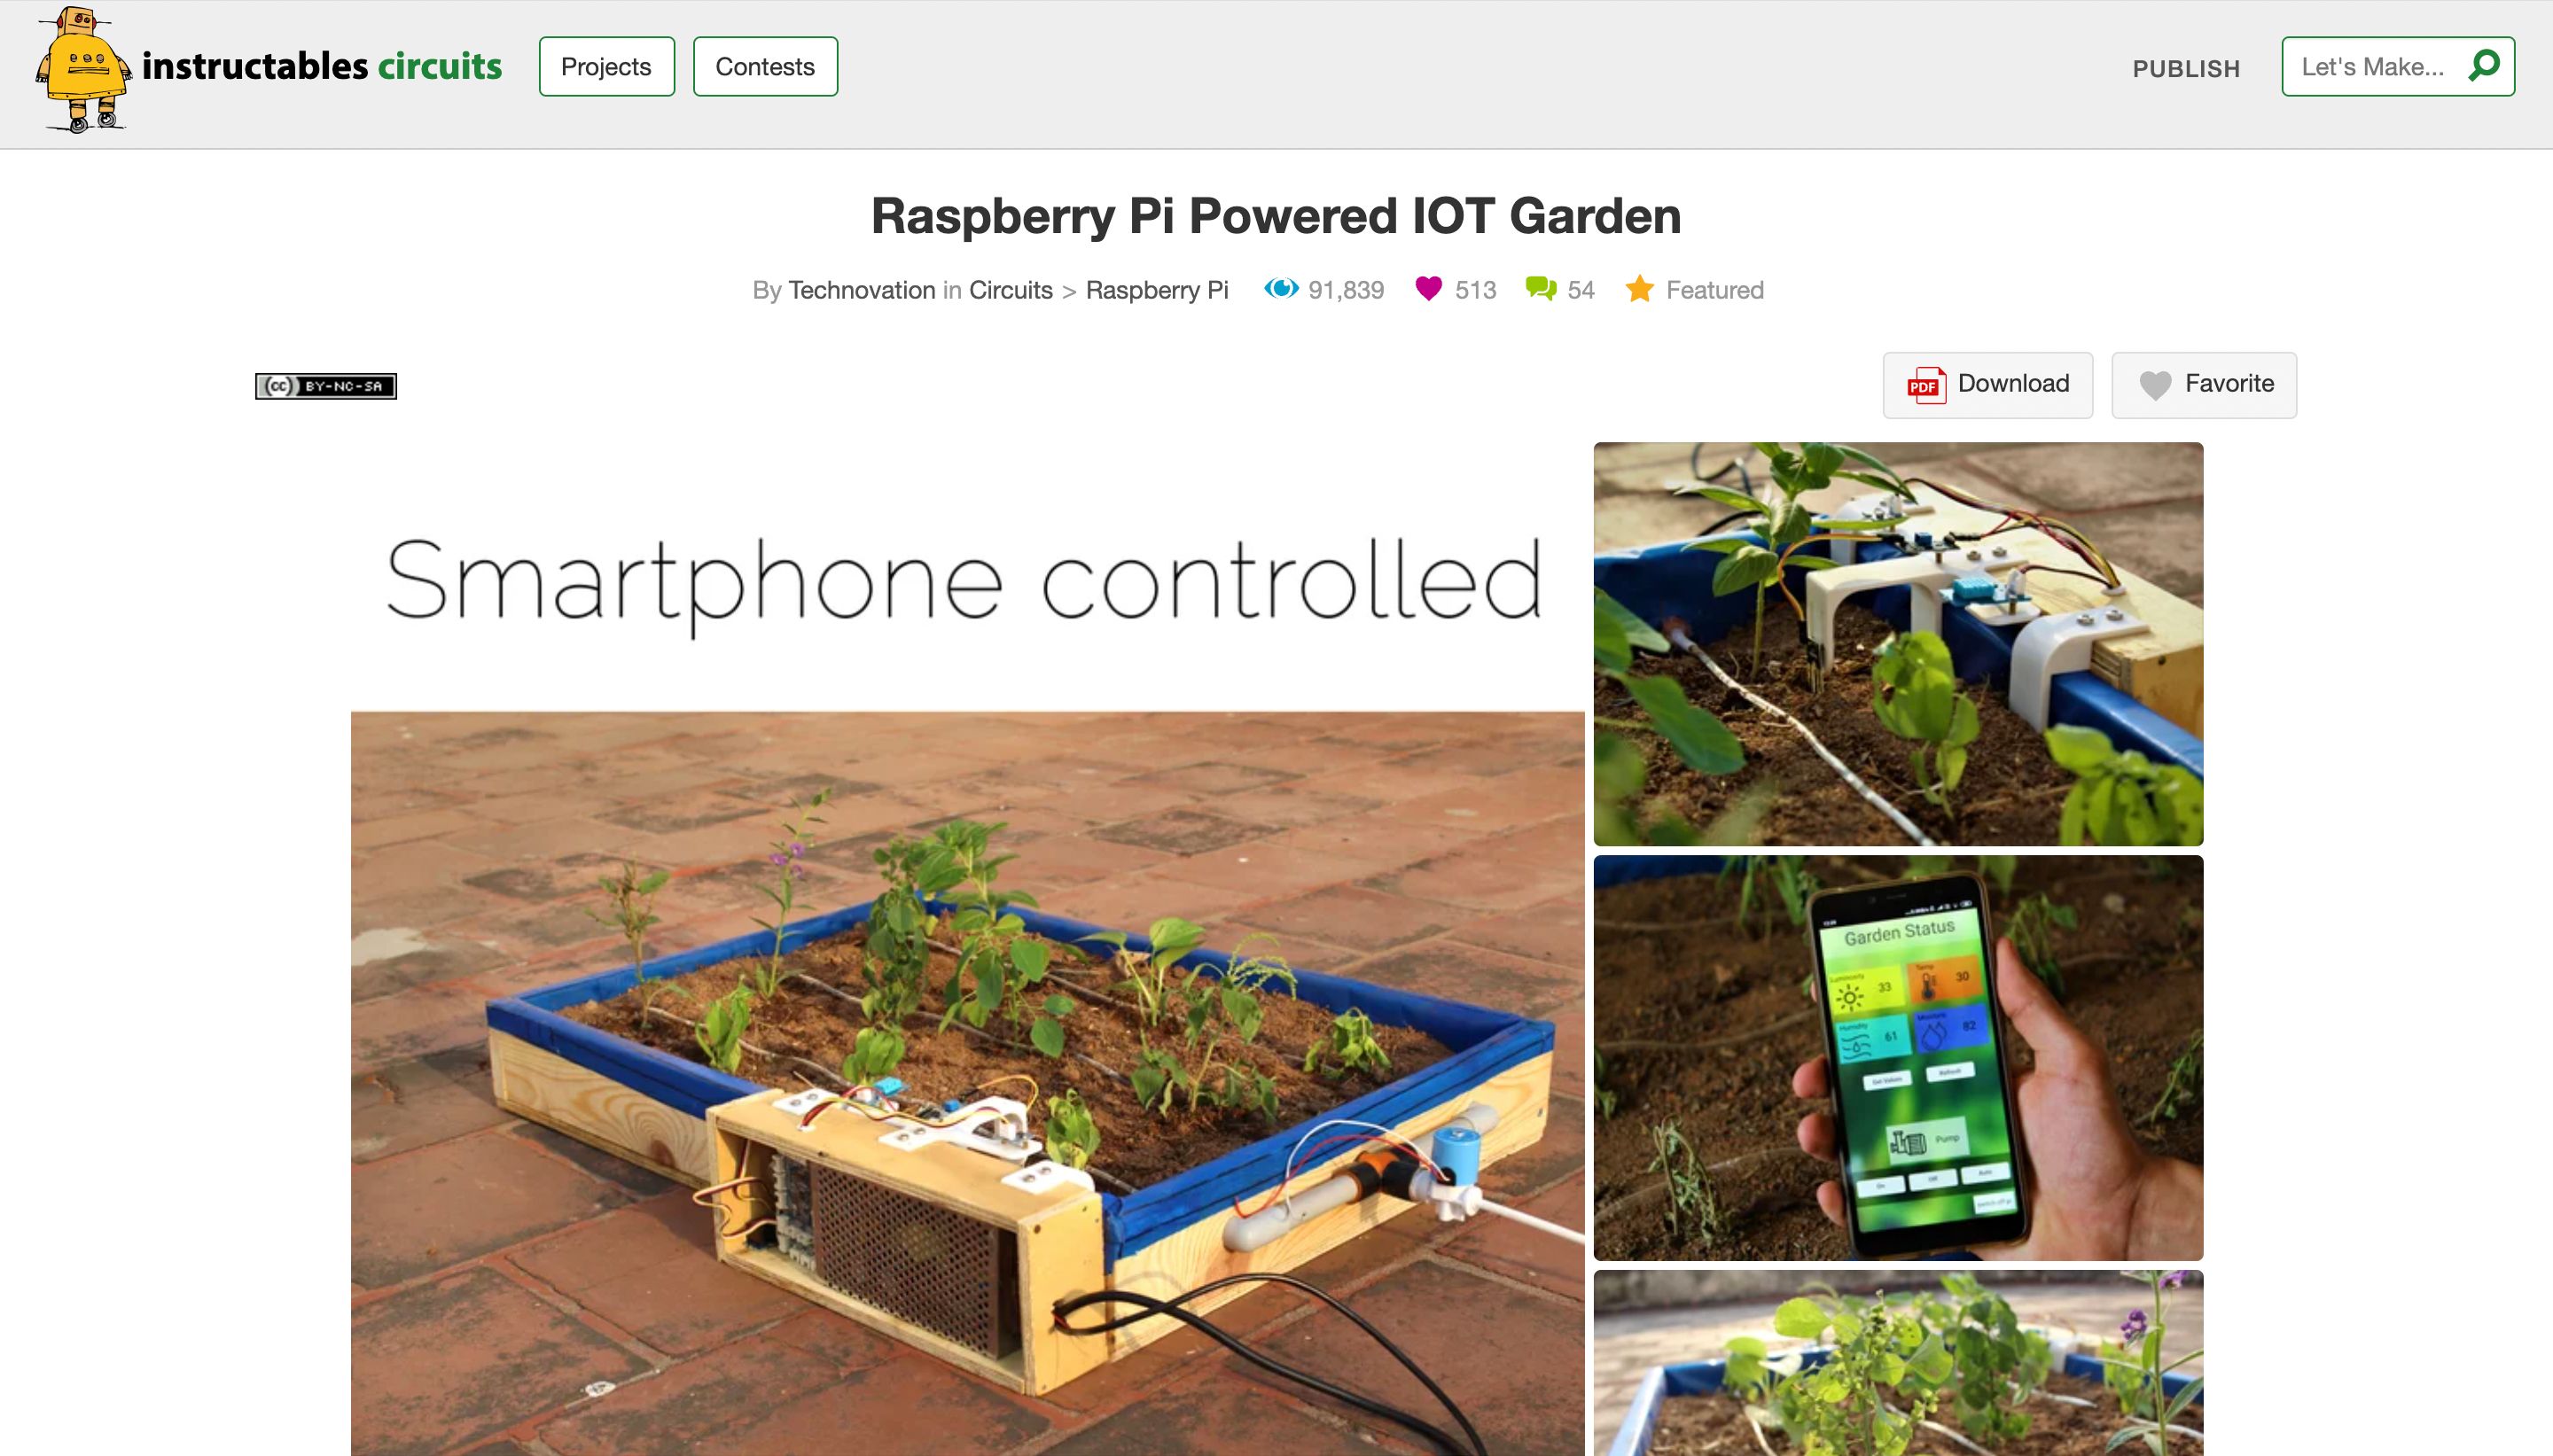 Raspberry Pi IoT Garden